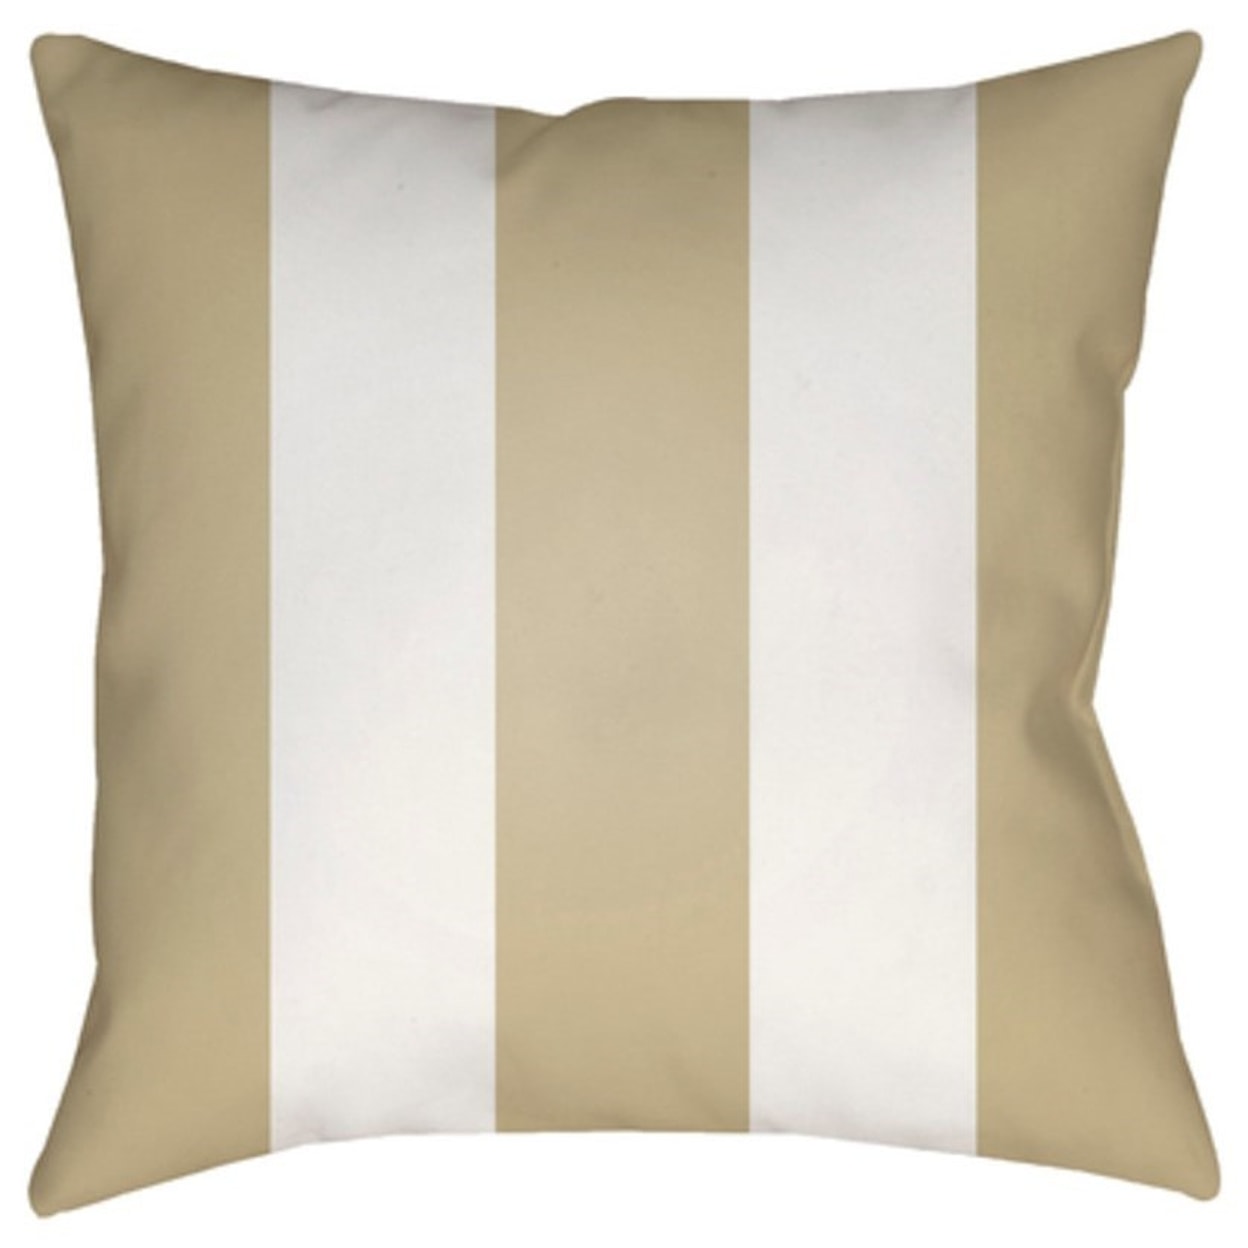 Surya Edgartown Pillow